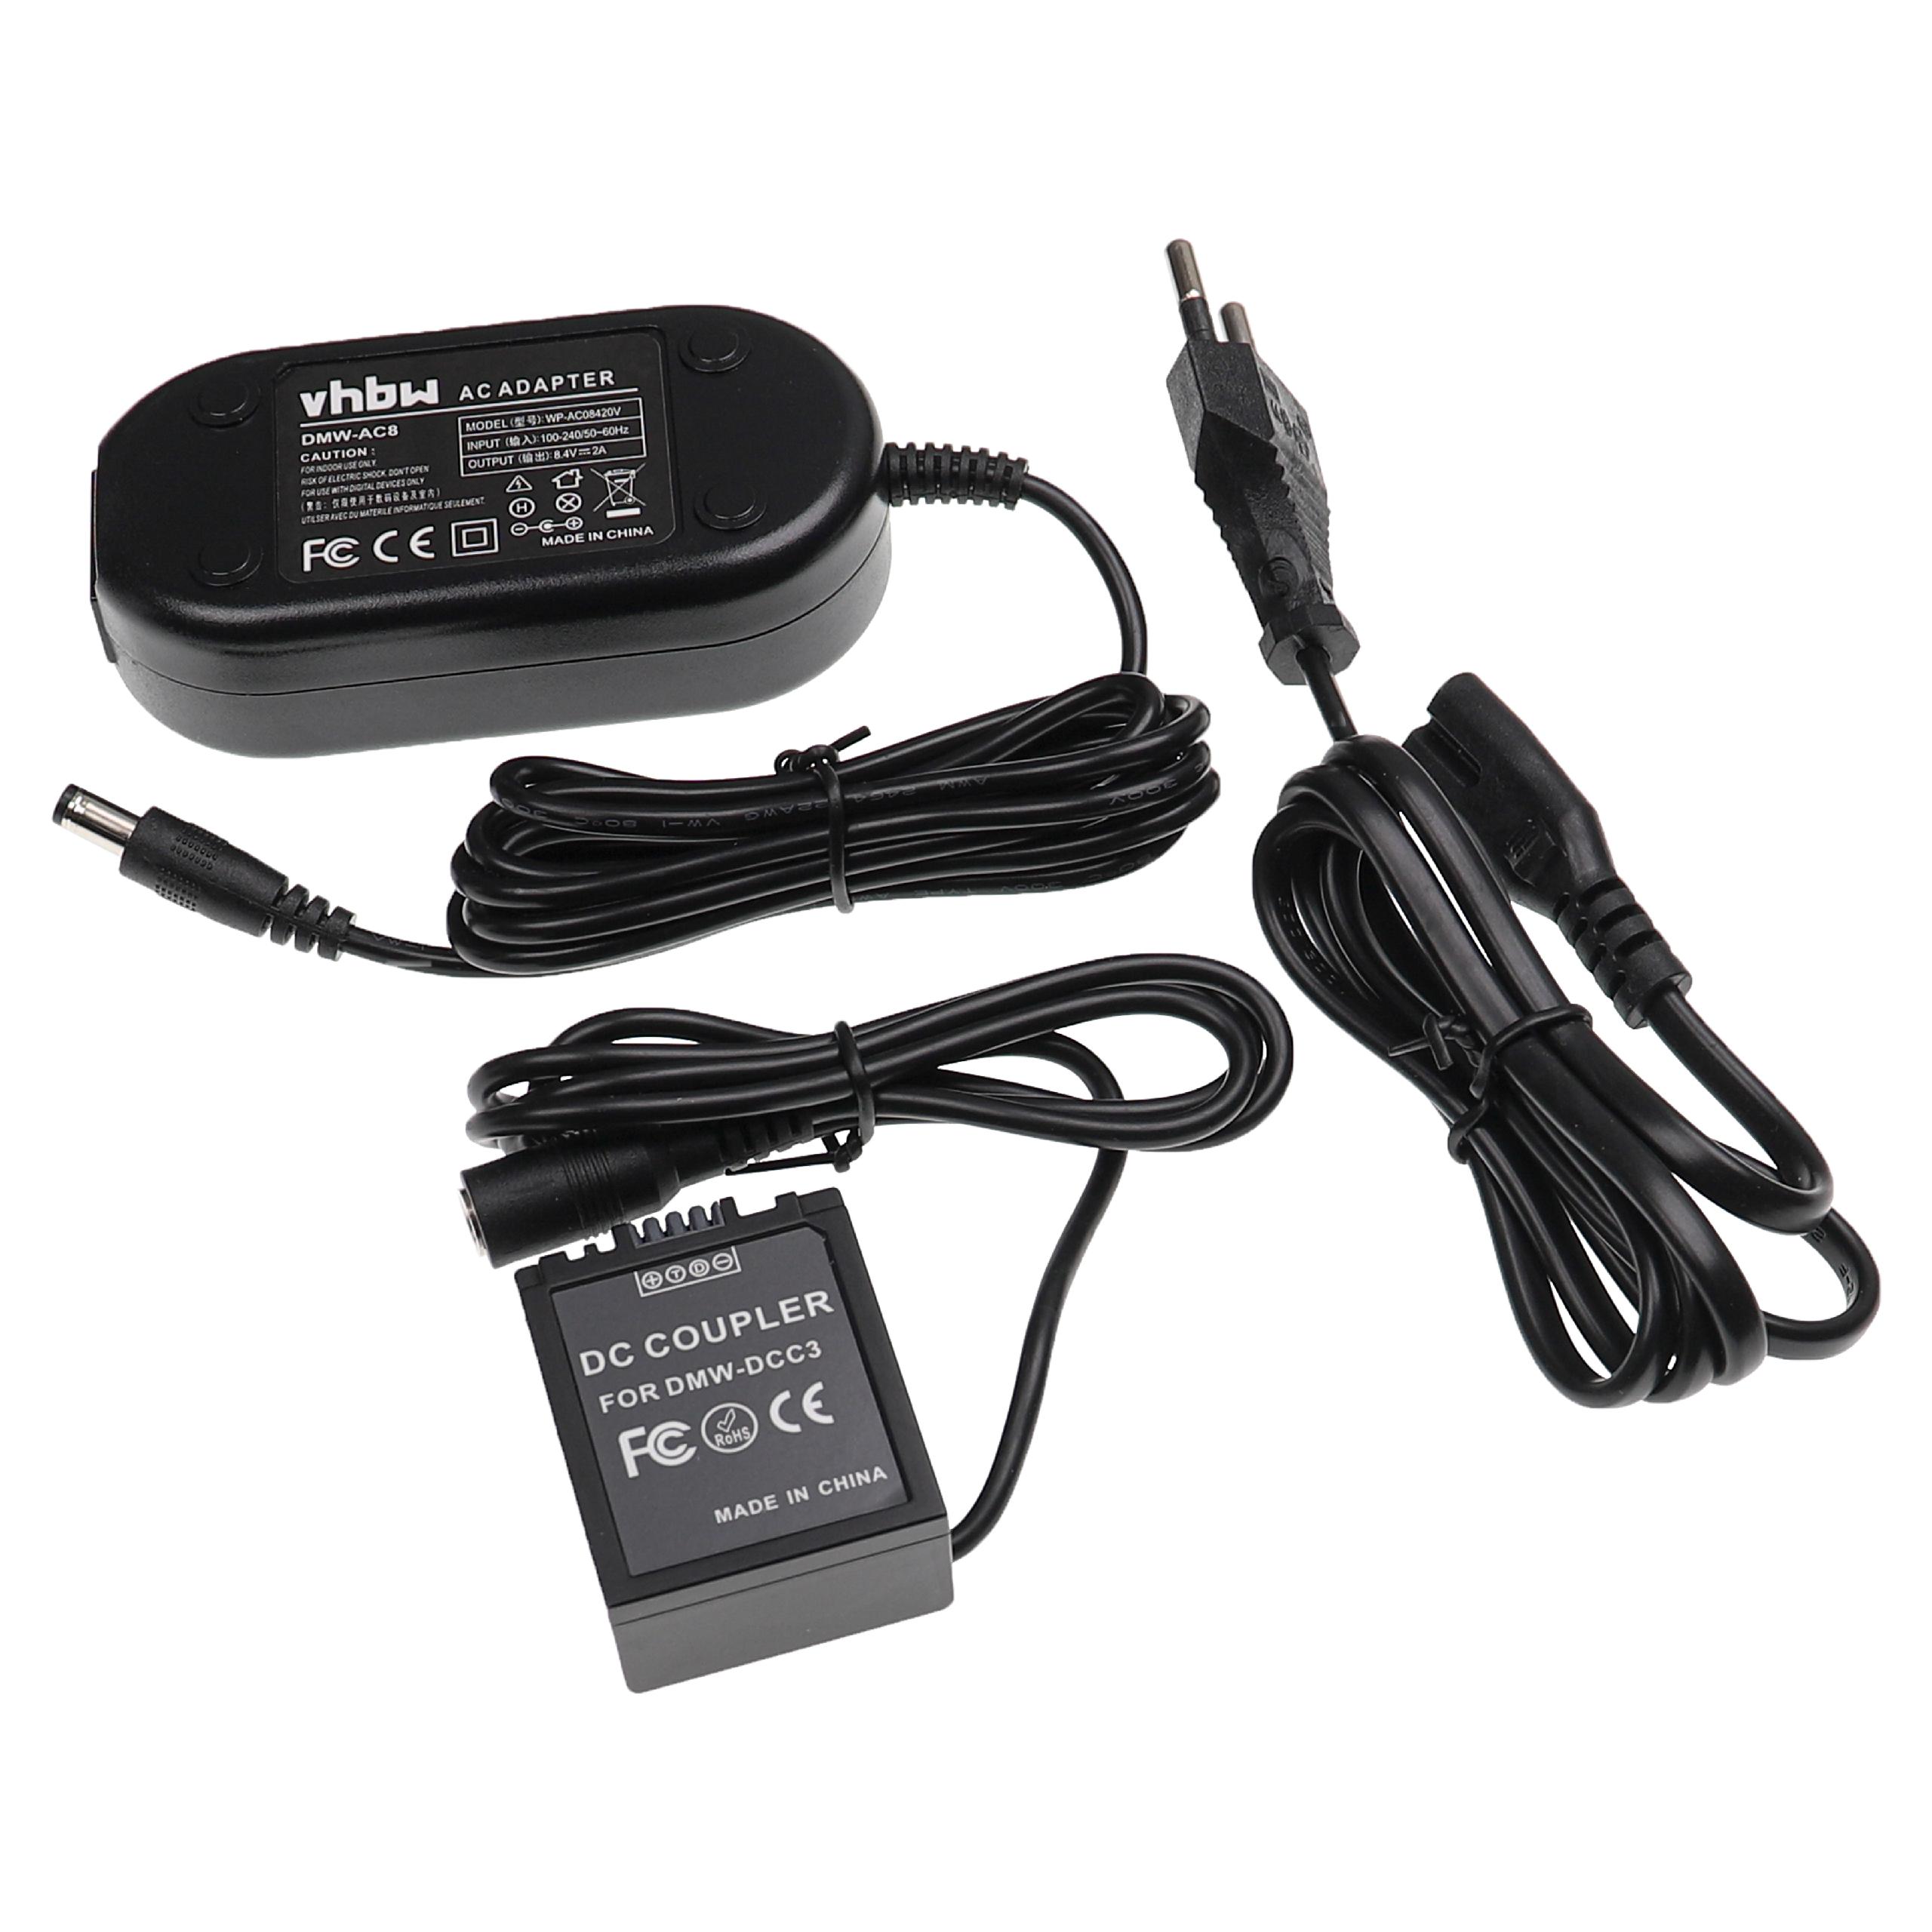 Power Supply replaces DMW-AC8 for Camera + DC Coupler as Panasonic DMW-DCC3 - 2 m, 8.4 V 2.0 A